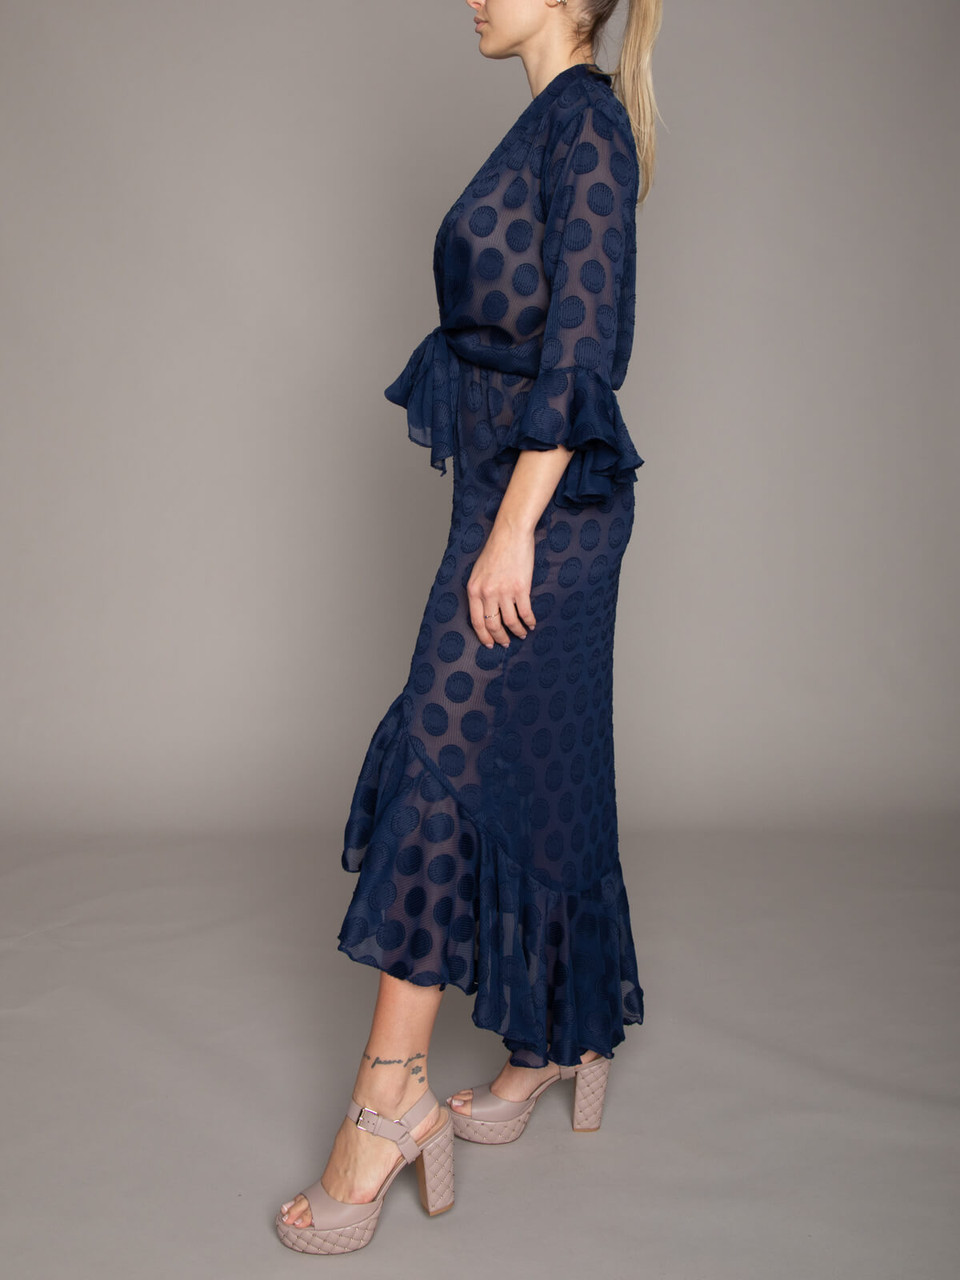 Adriana Degreas Women's Polka Dot Maxi Dress, Size 8 UK, Blue Polyester